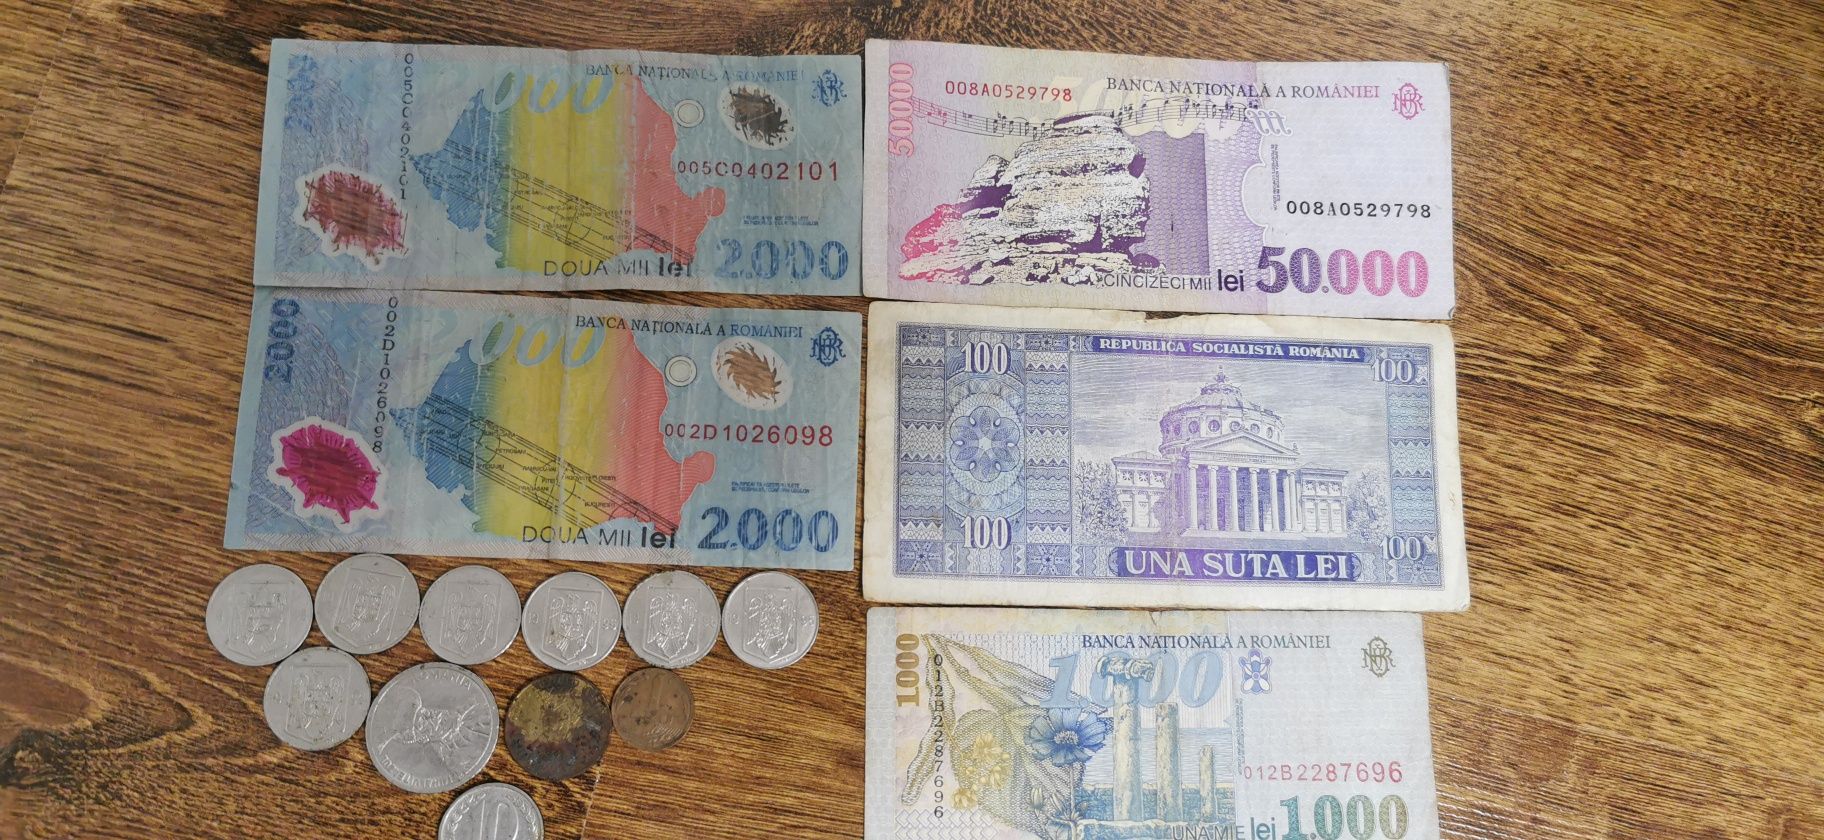 Vand bancnote/monezi romanesti colectie